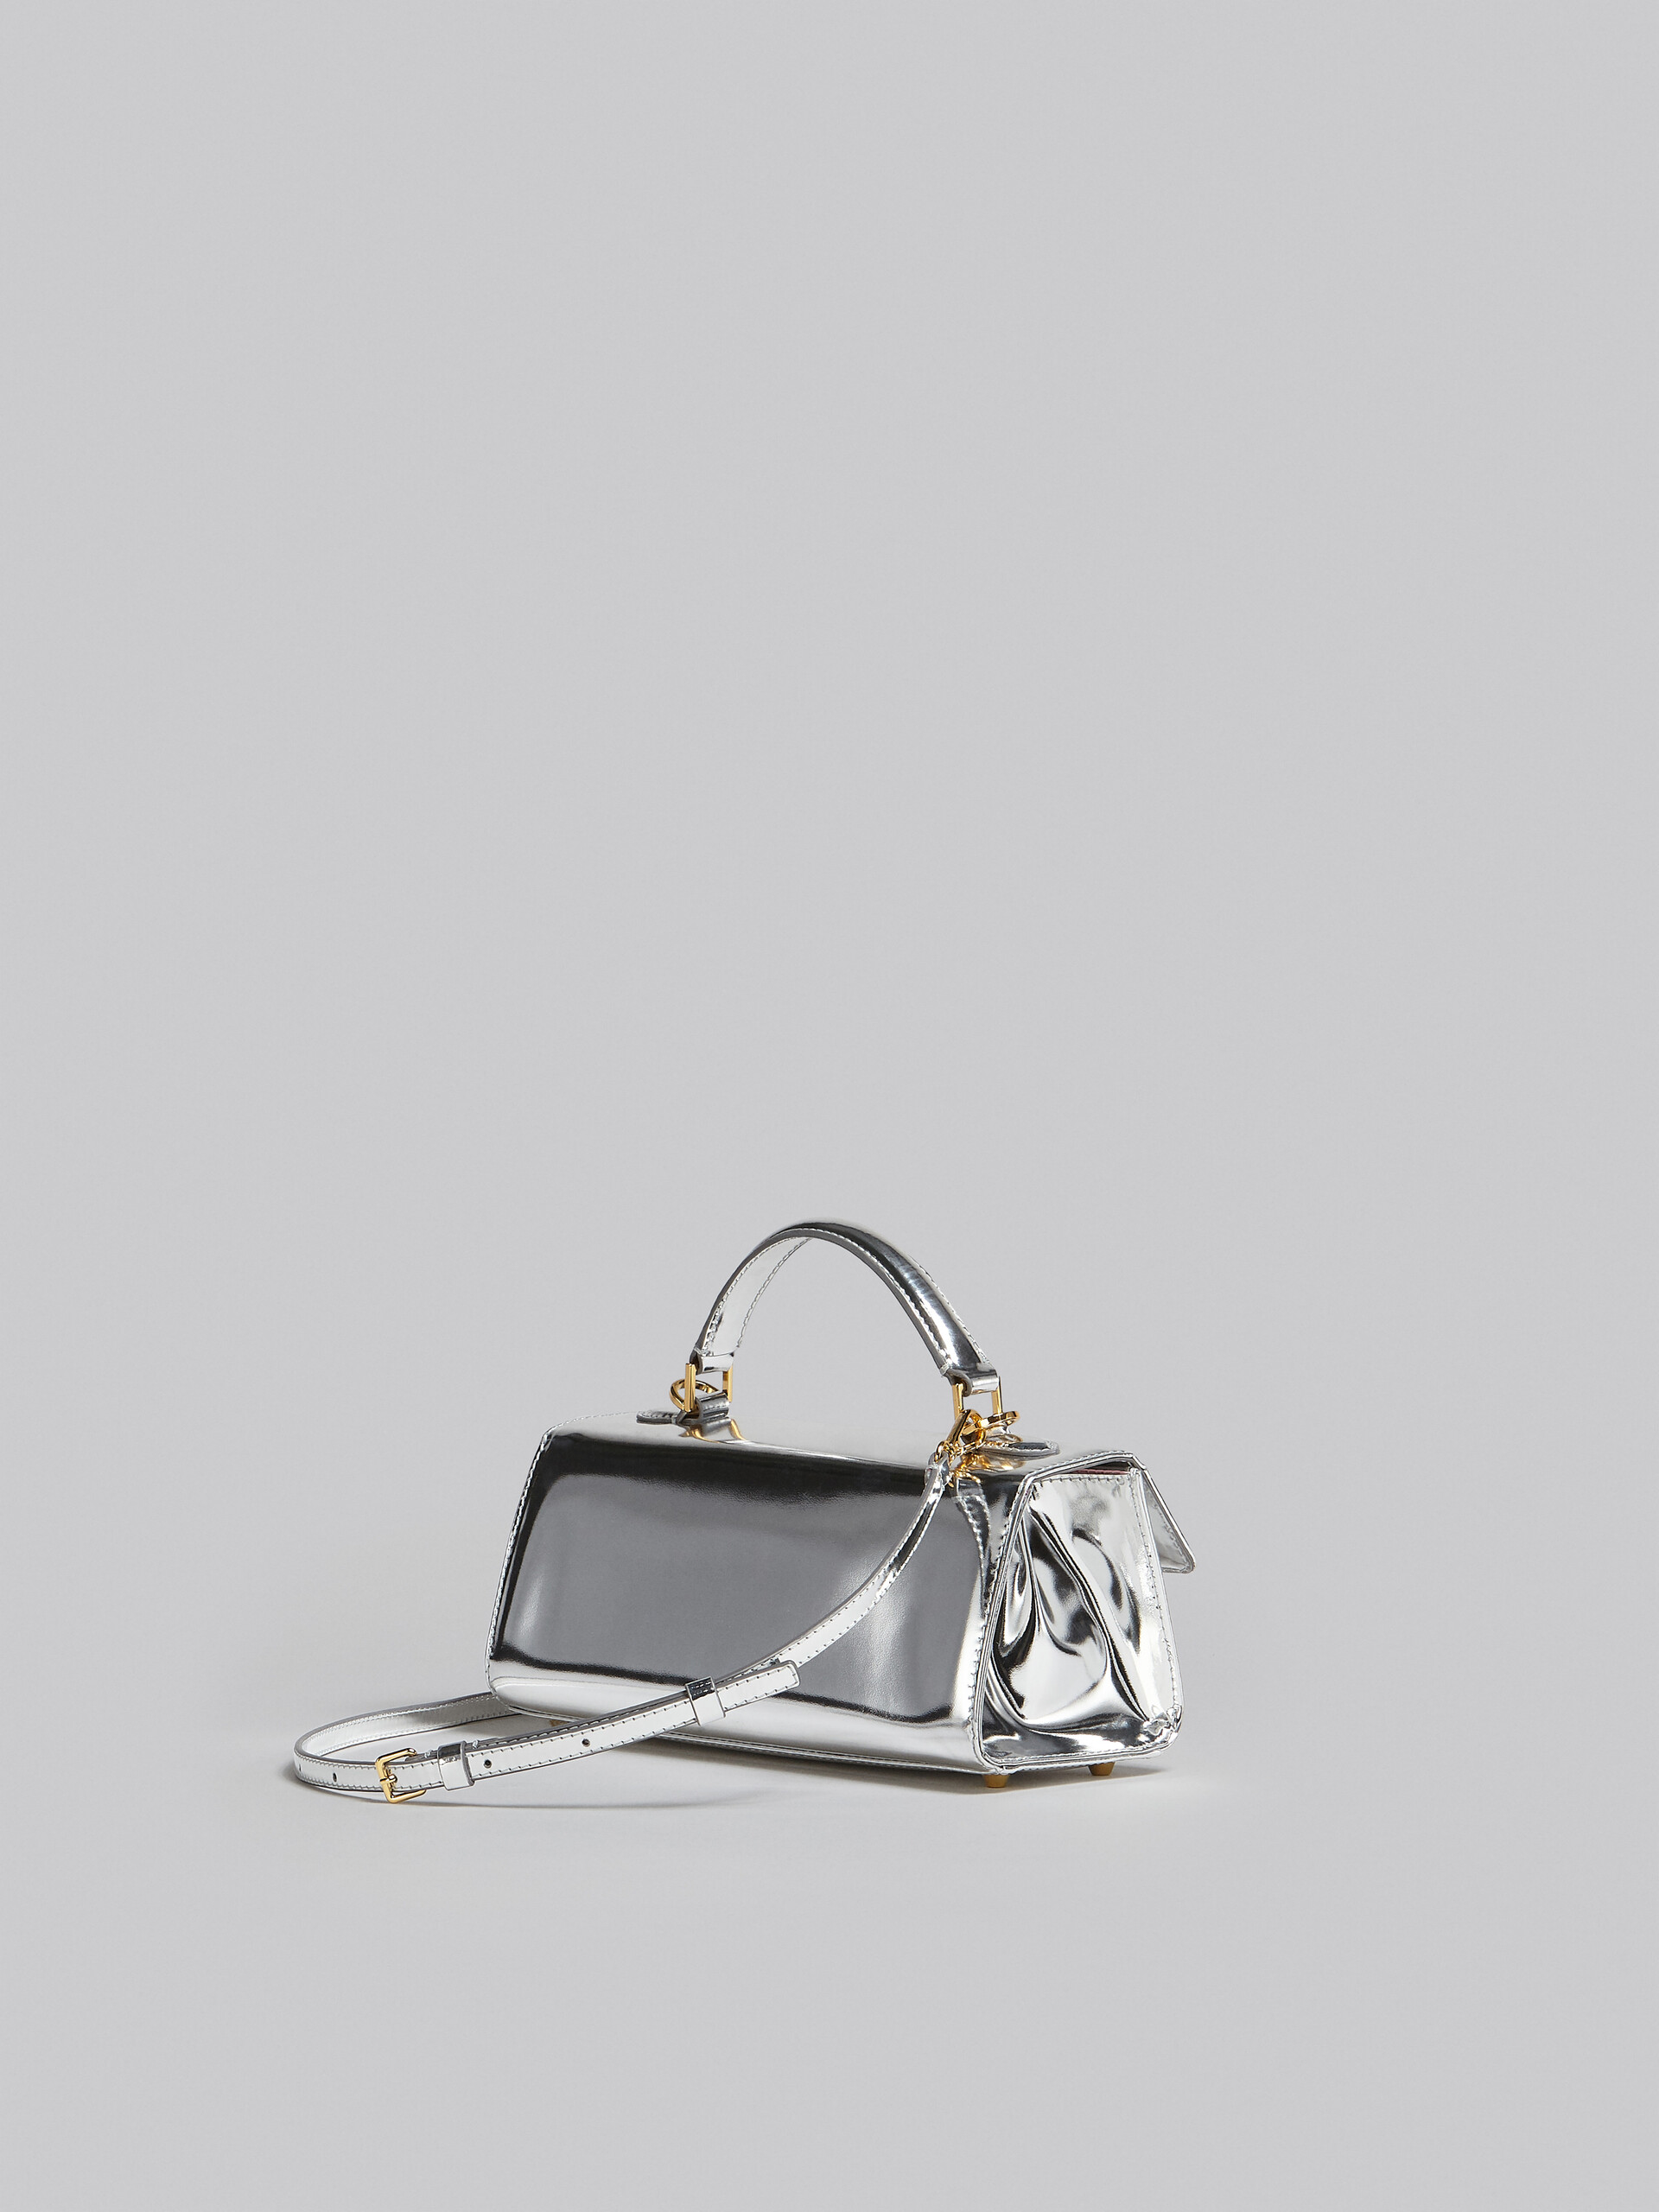 Relativity Medium Bag in silver-tone leather - Handbag - Image 2